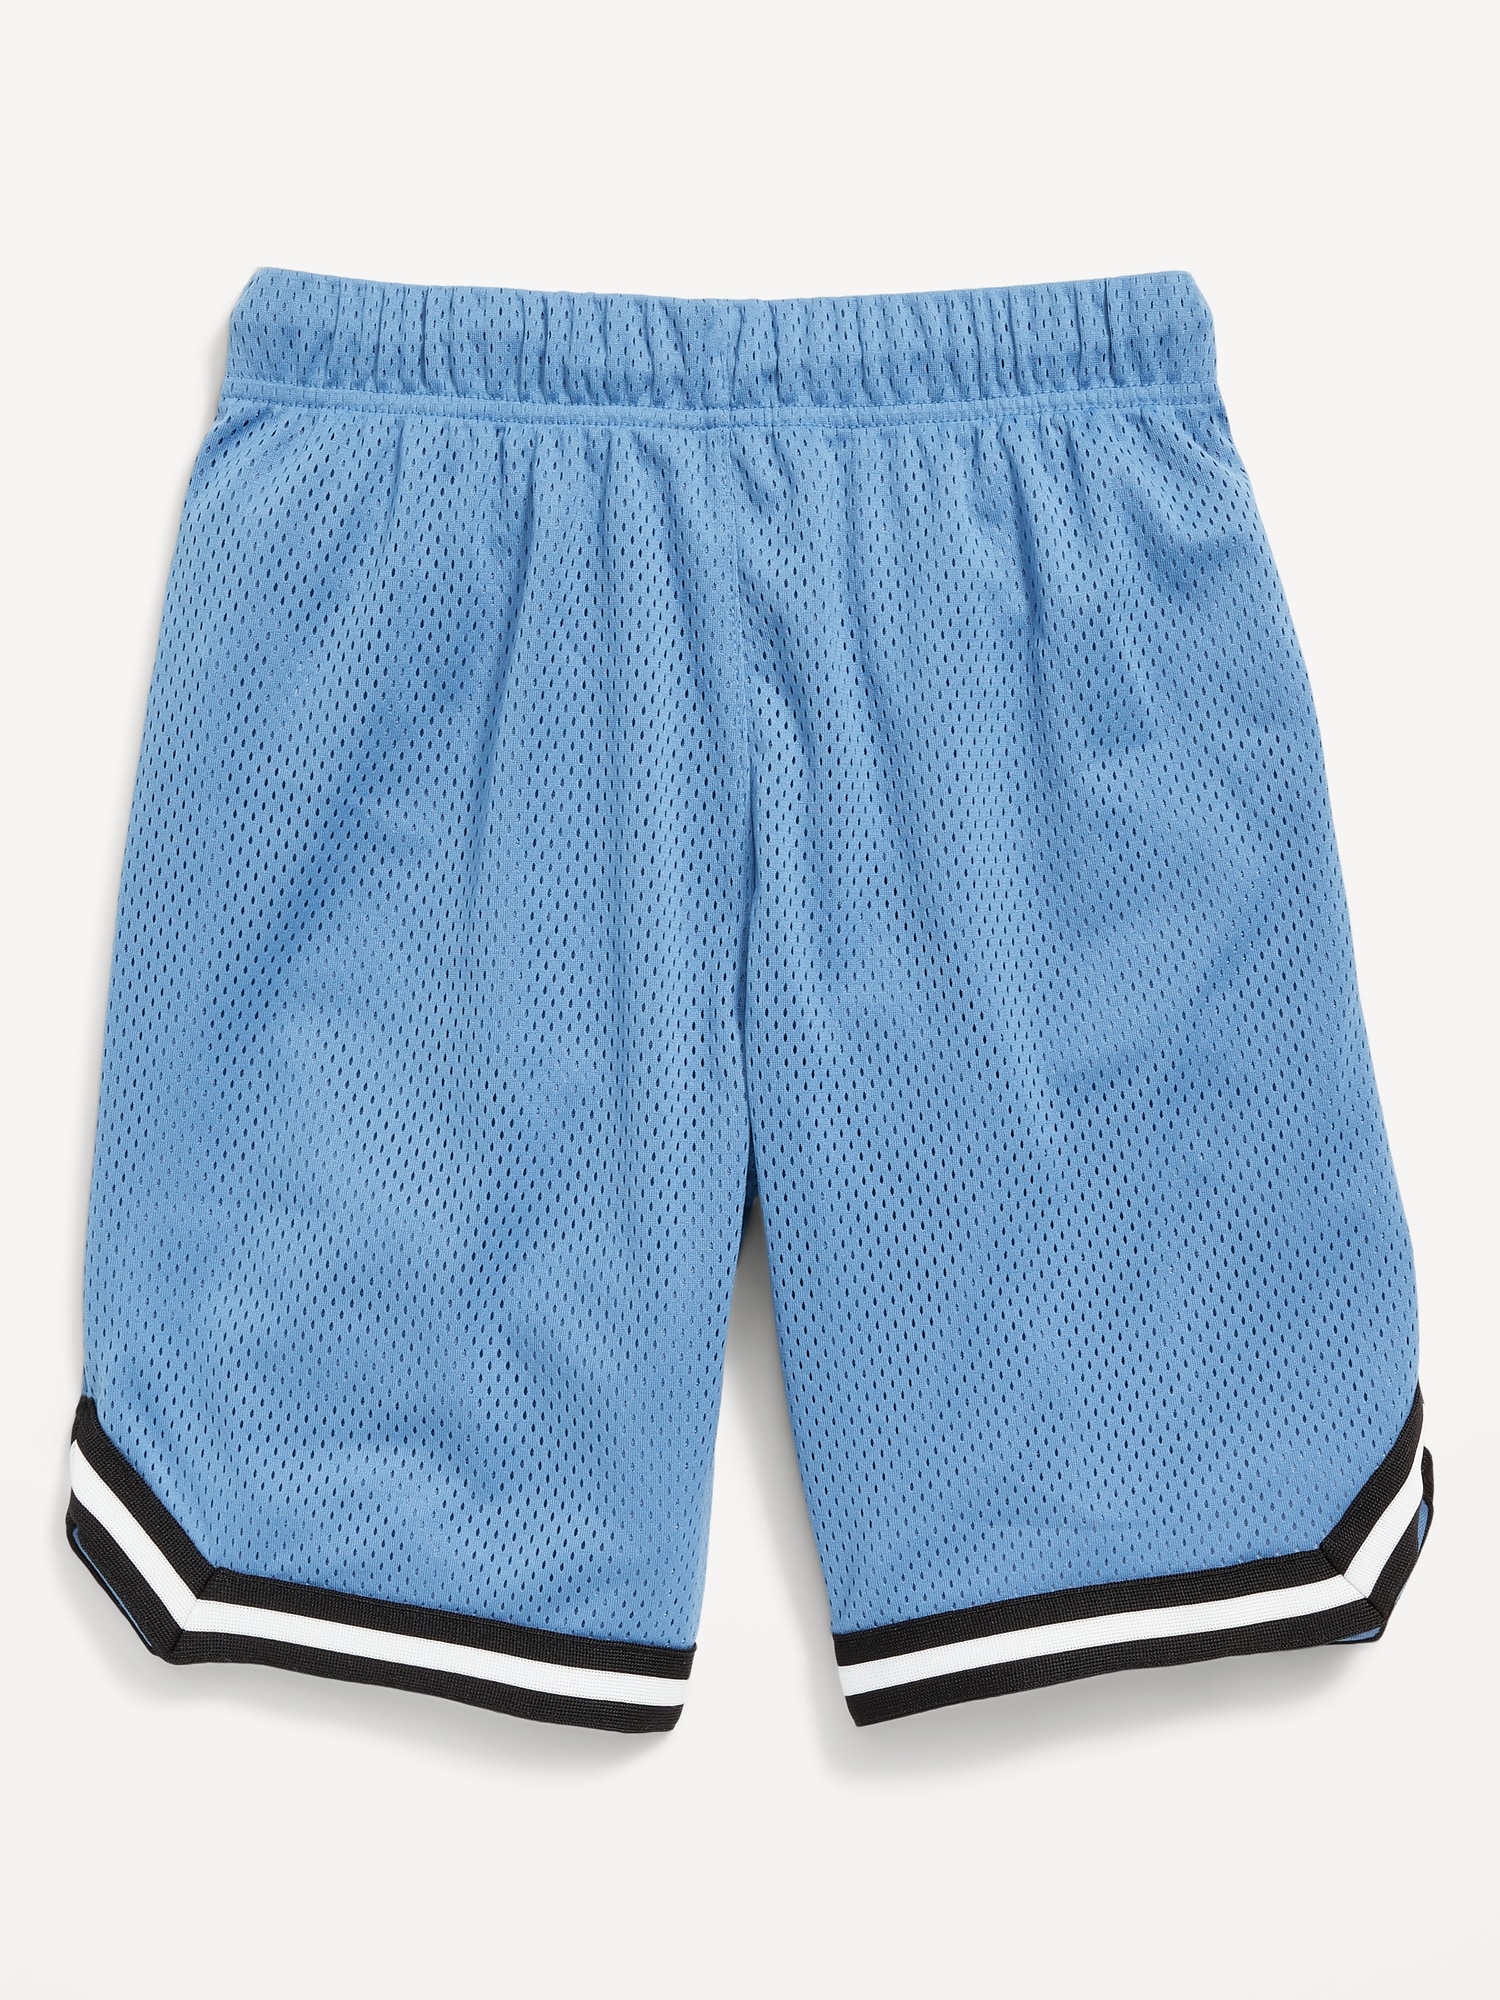 Mesh Basketball Shorts for Boys (At Knee) | Old Navy